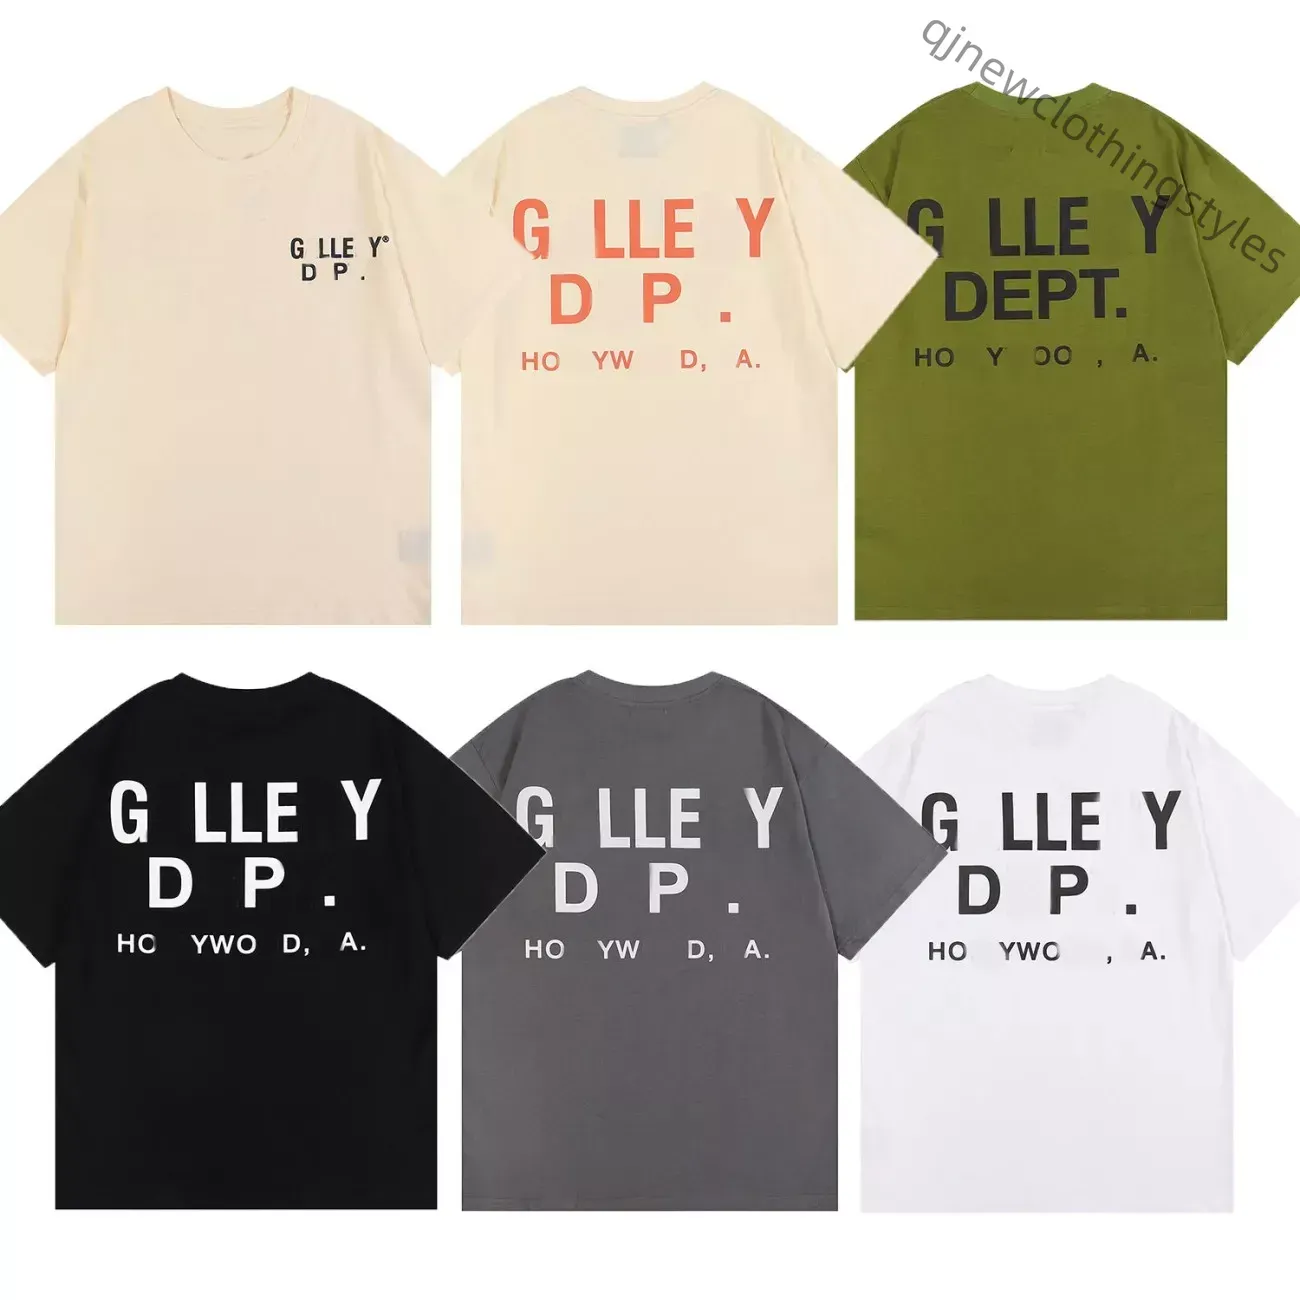 Classic Gally Tees Fashion T Shirts Mens Women Designer T-shirts depts cottons white shirt dept shirt